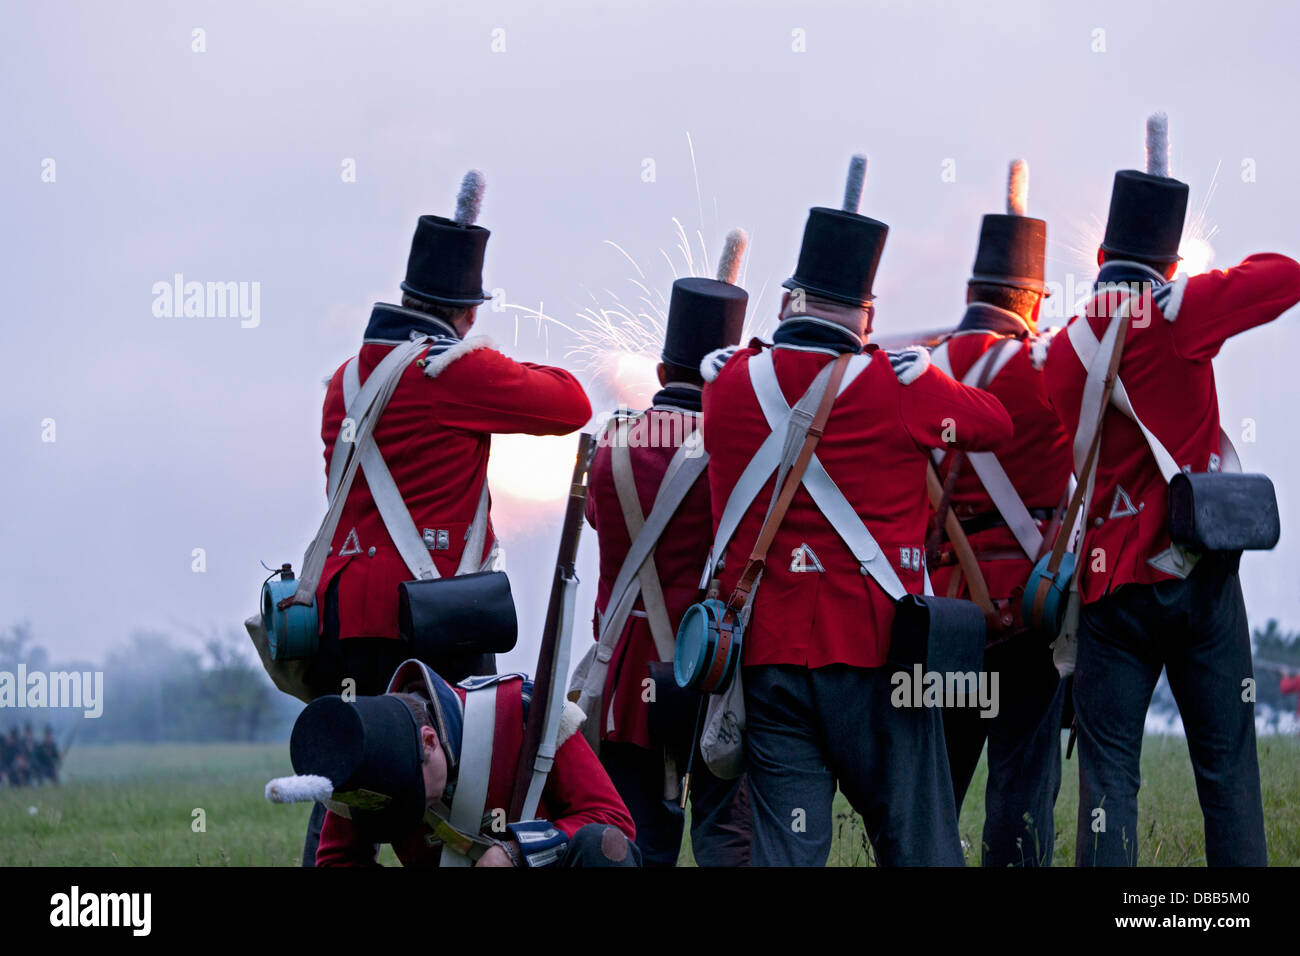 Canada,Ontario,Stoney Creek, War of 1812, Battle of Stoney Creek, British troops firing muskets Stock Photo